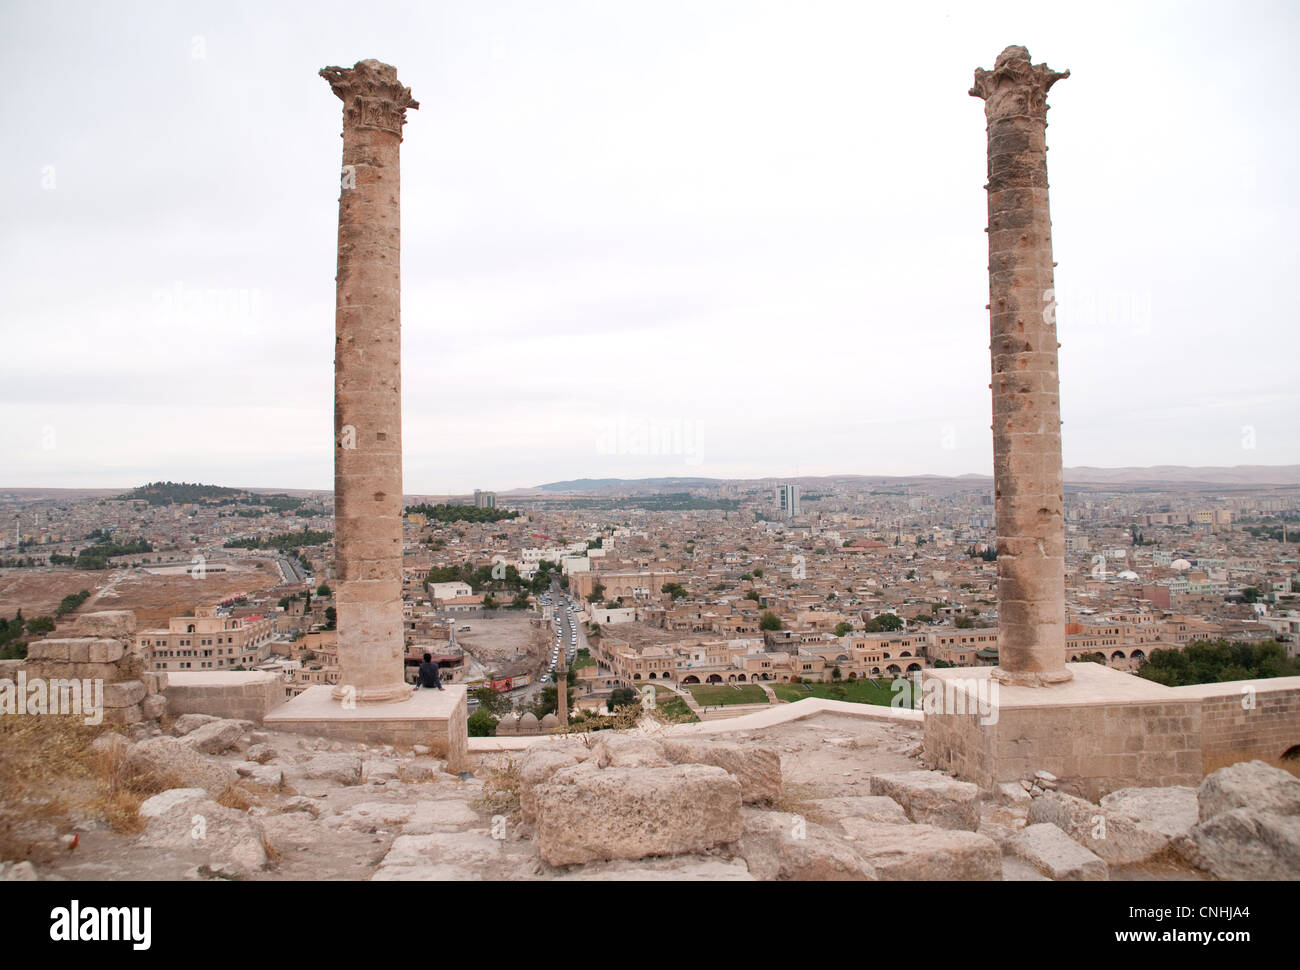 Ancient Roman Corinthian columns at the Edessa Citadel overlooking the city of Urfa in the eastern Anatolia region of southeastern Turkey. Stock Photo